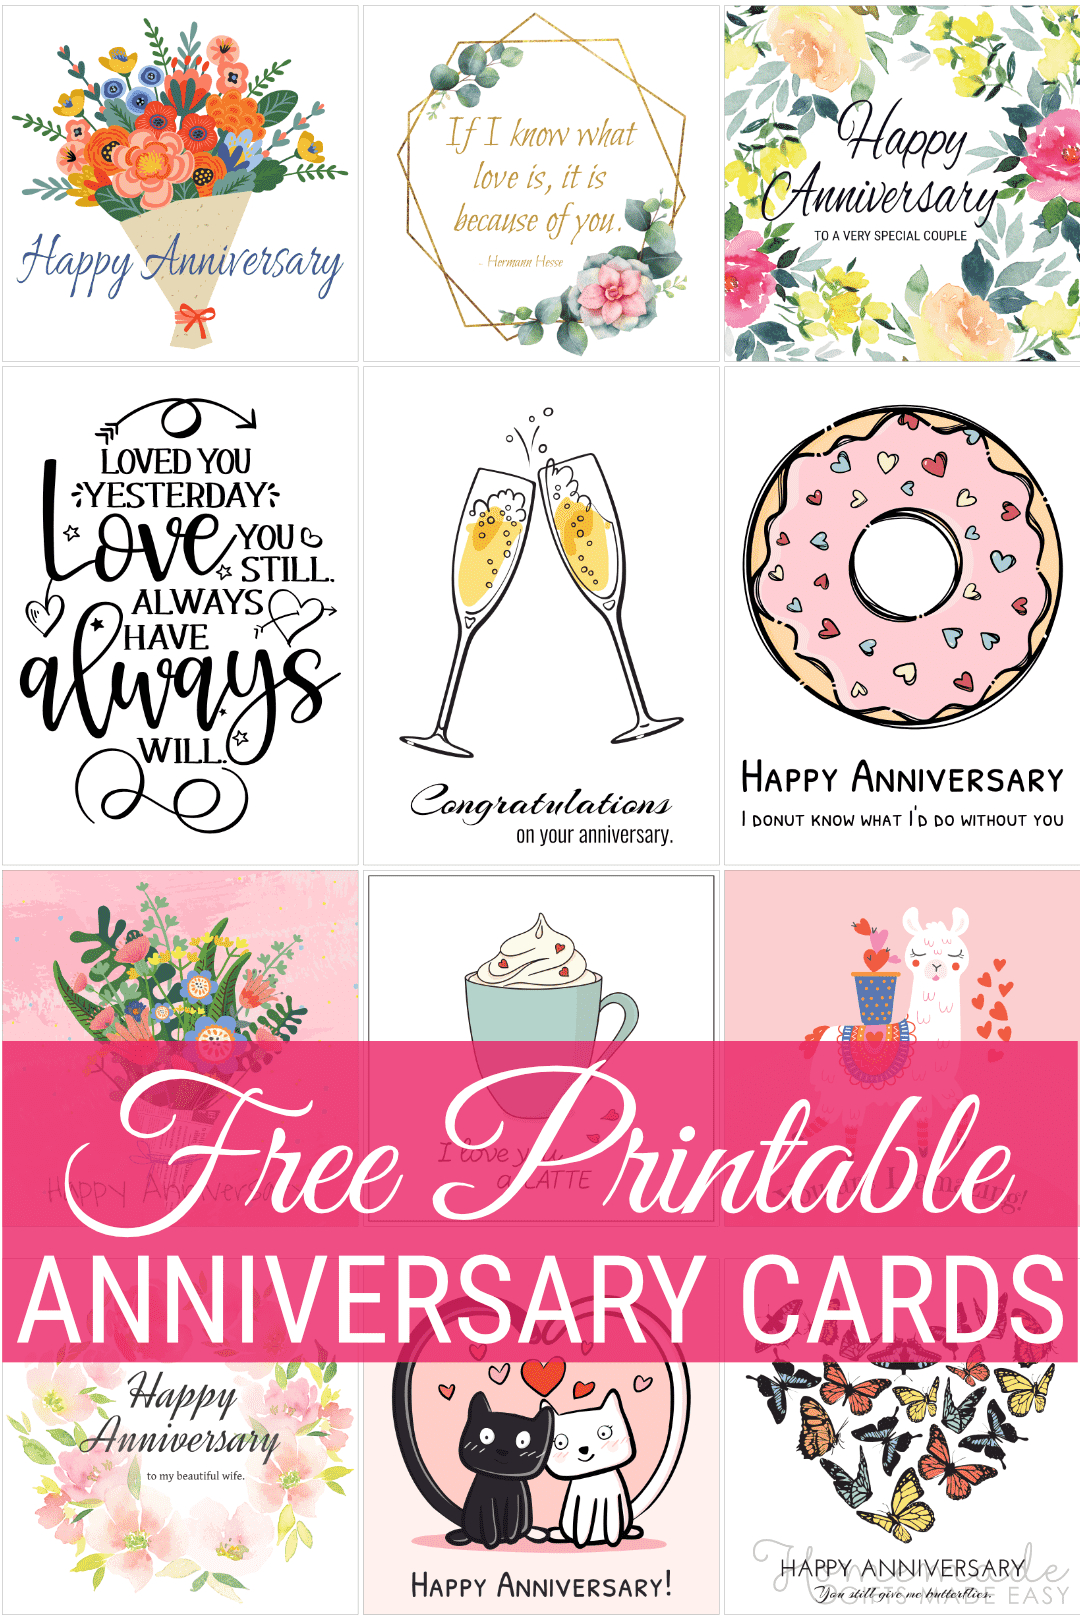 Free Printable Anniversary Cards - Free Printable 10 Year Anniversary Cards